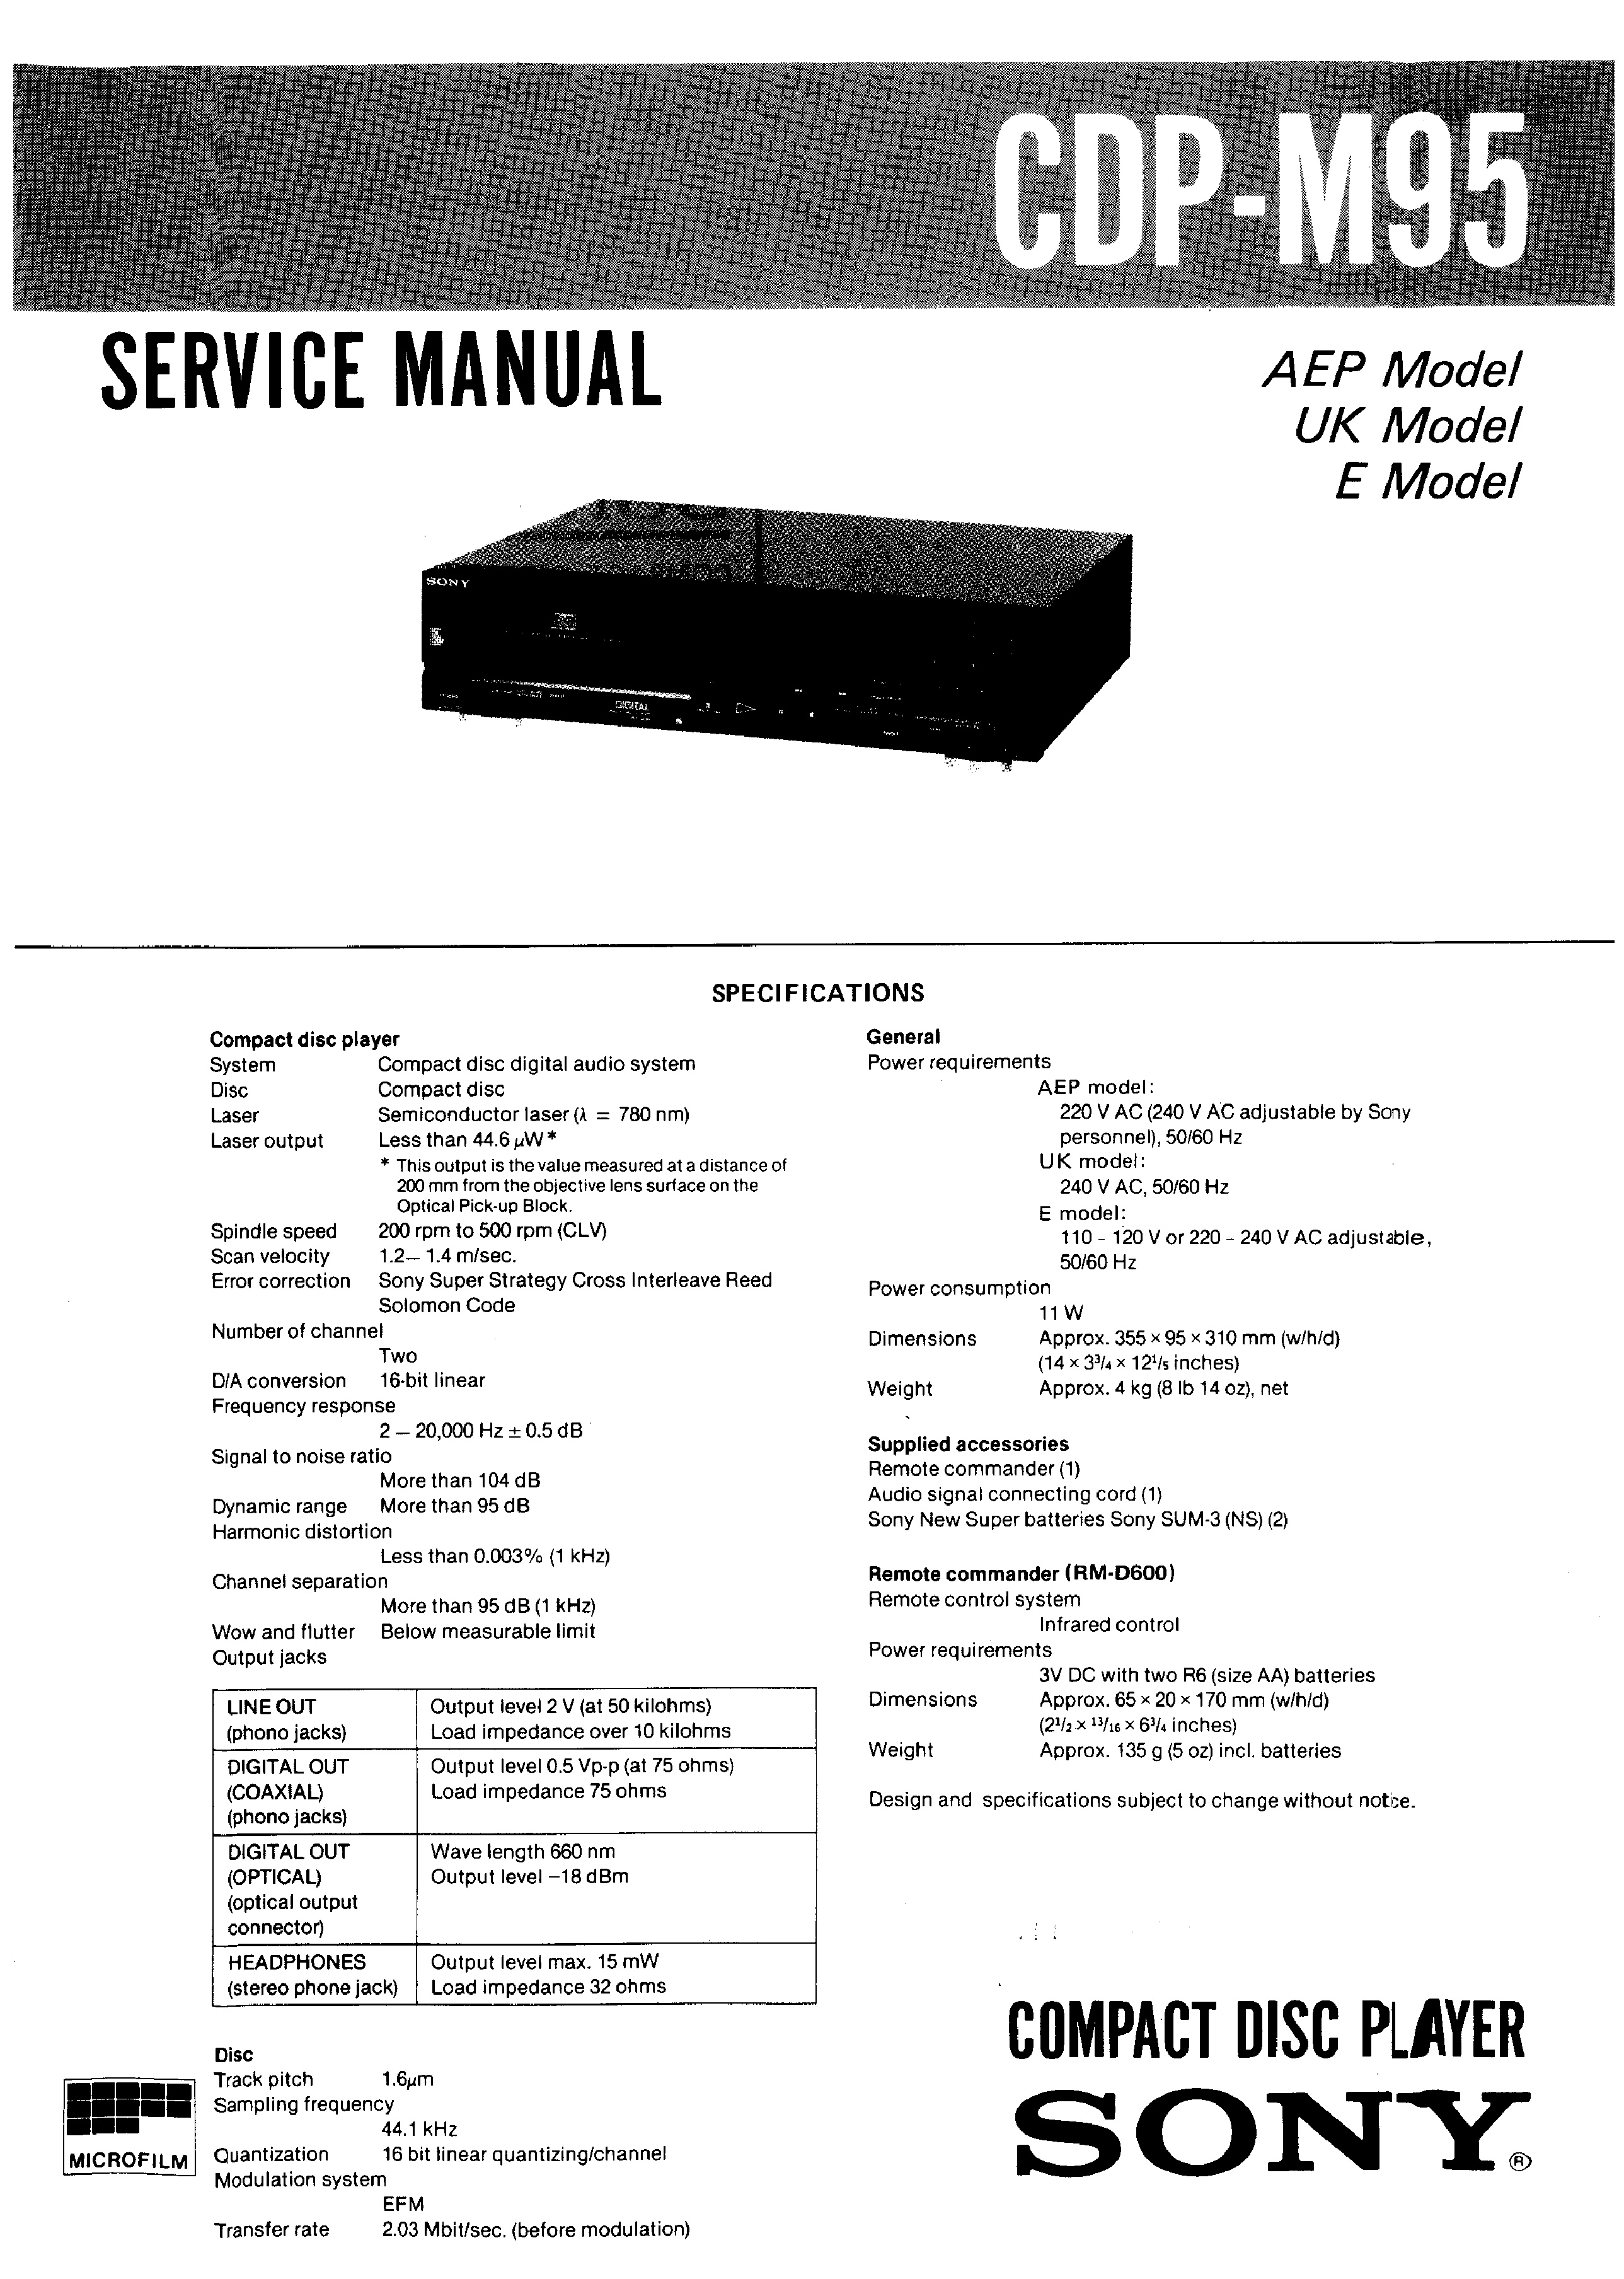 Sony CDP-M 95-Manual-1988.jpg